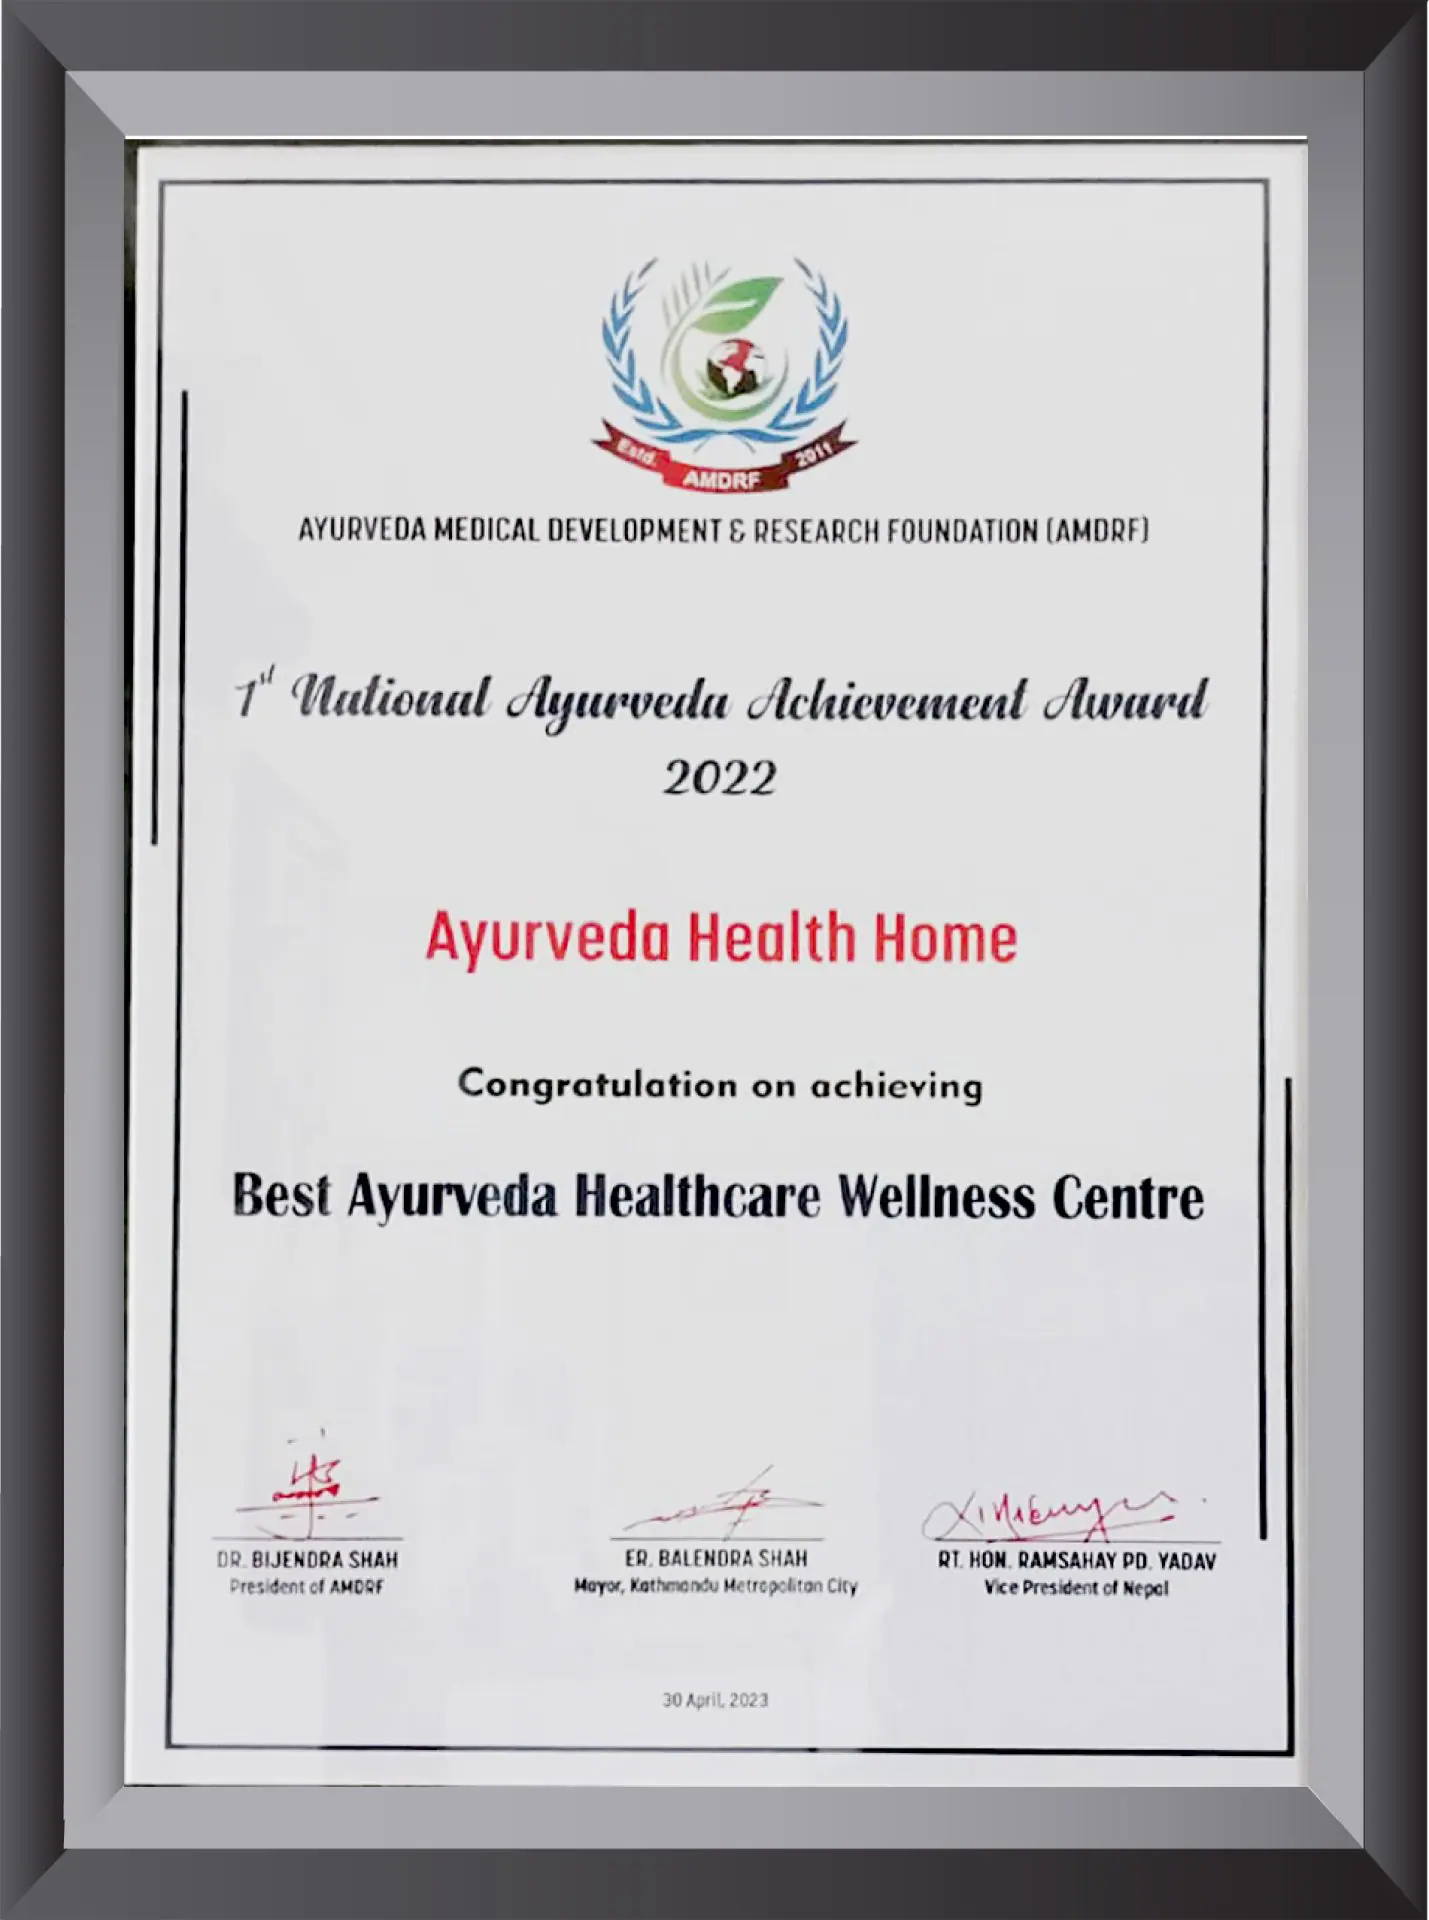 Ayurveda Health Home Wins Best Ayurveda Healthcare Wellness Center Award -  Ayurveda Health Home